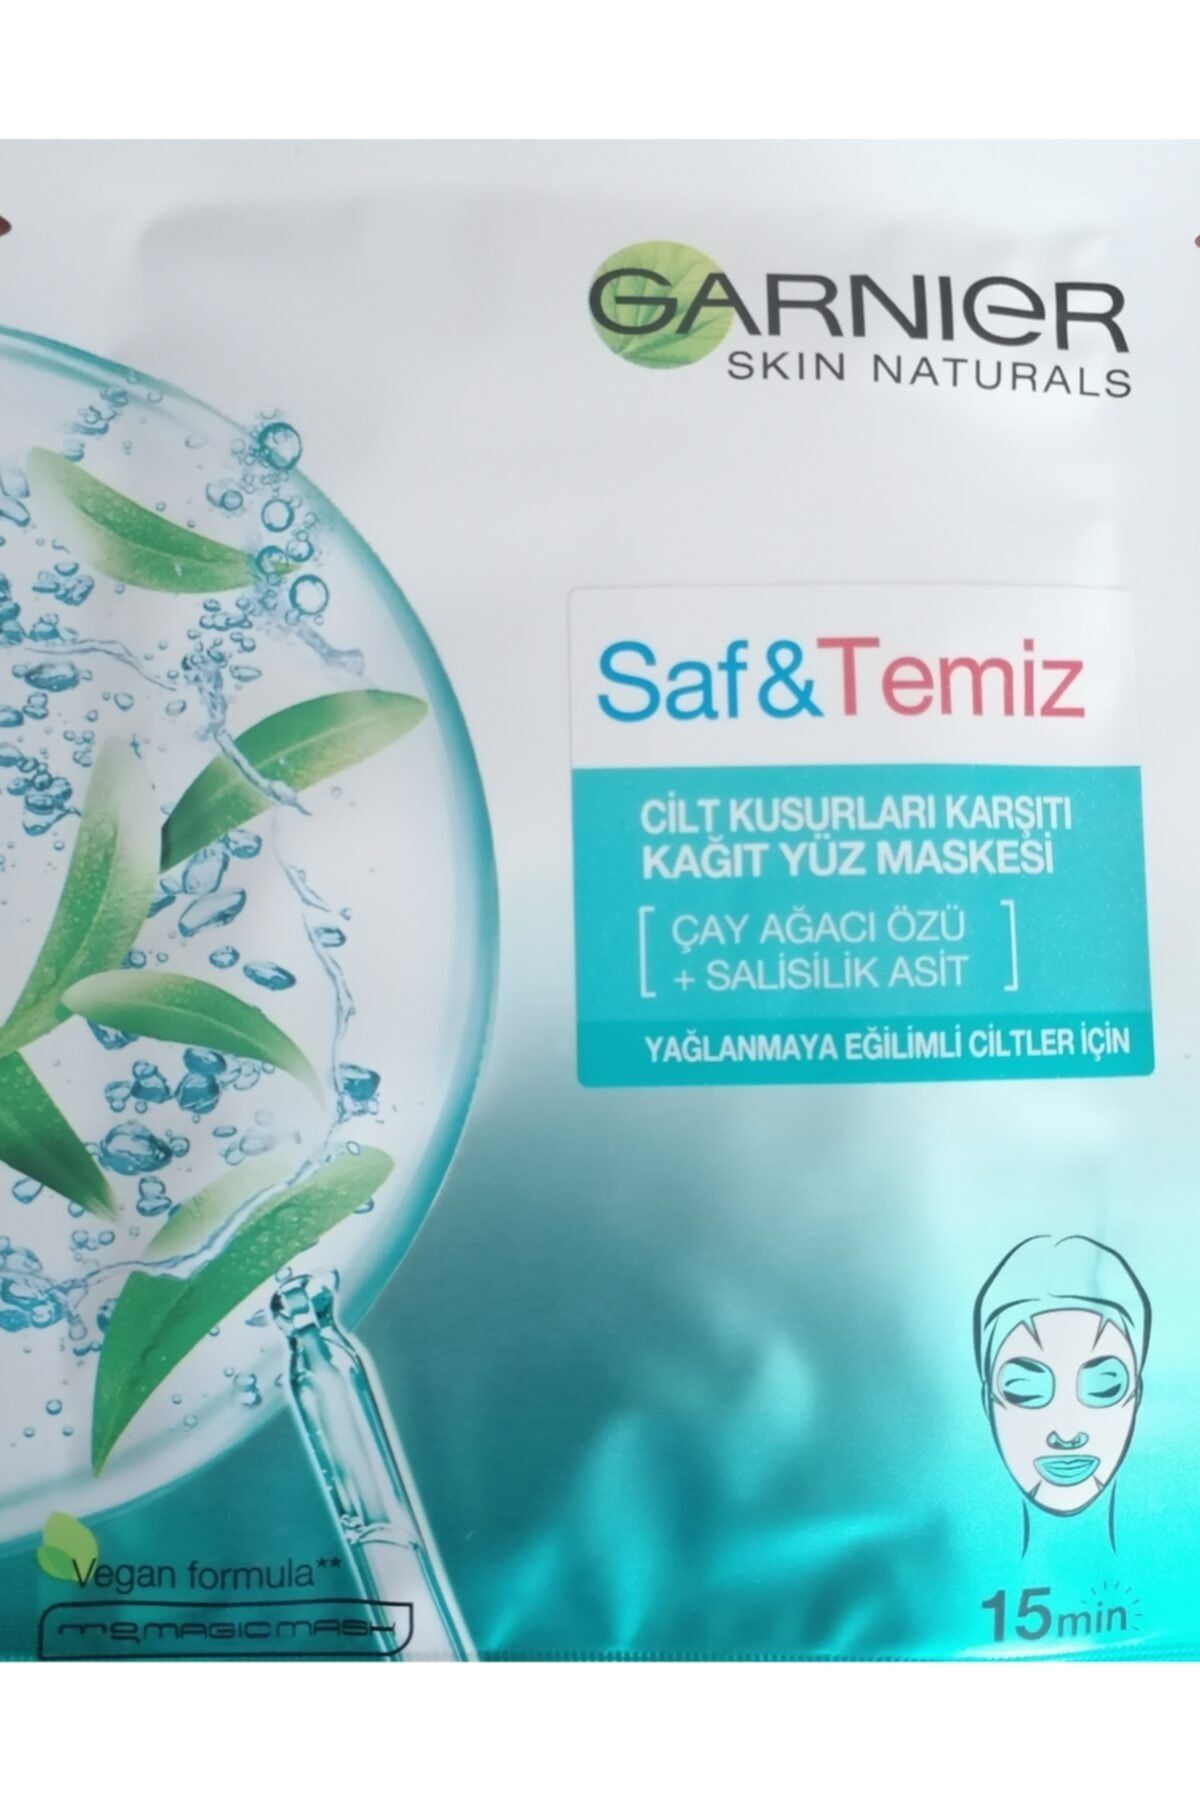 Garnier ماسک صورت کاغذی ضدپوره و مکانیک گیاهی